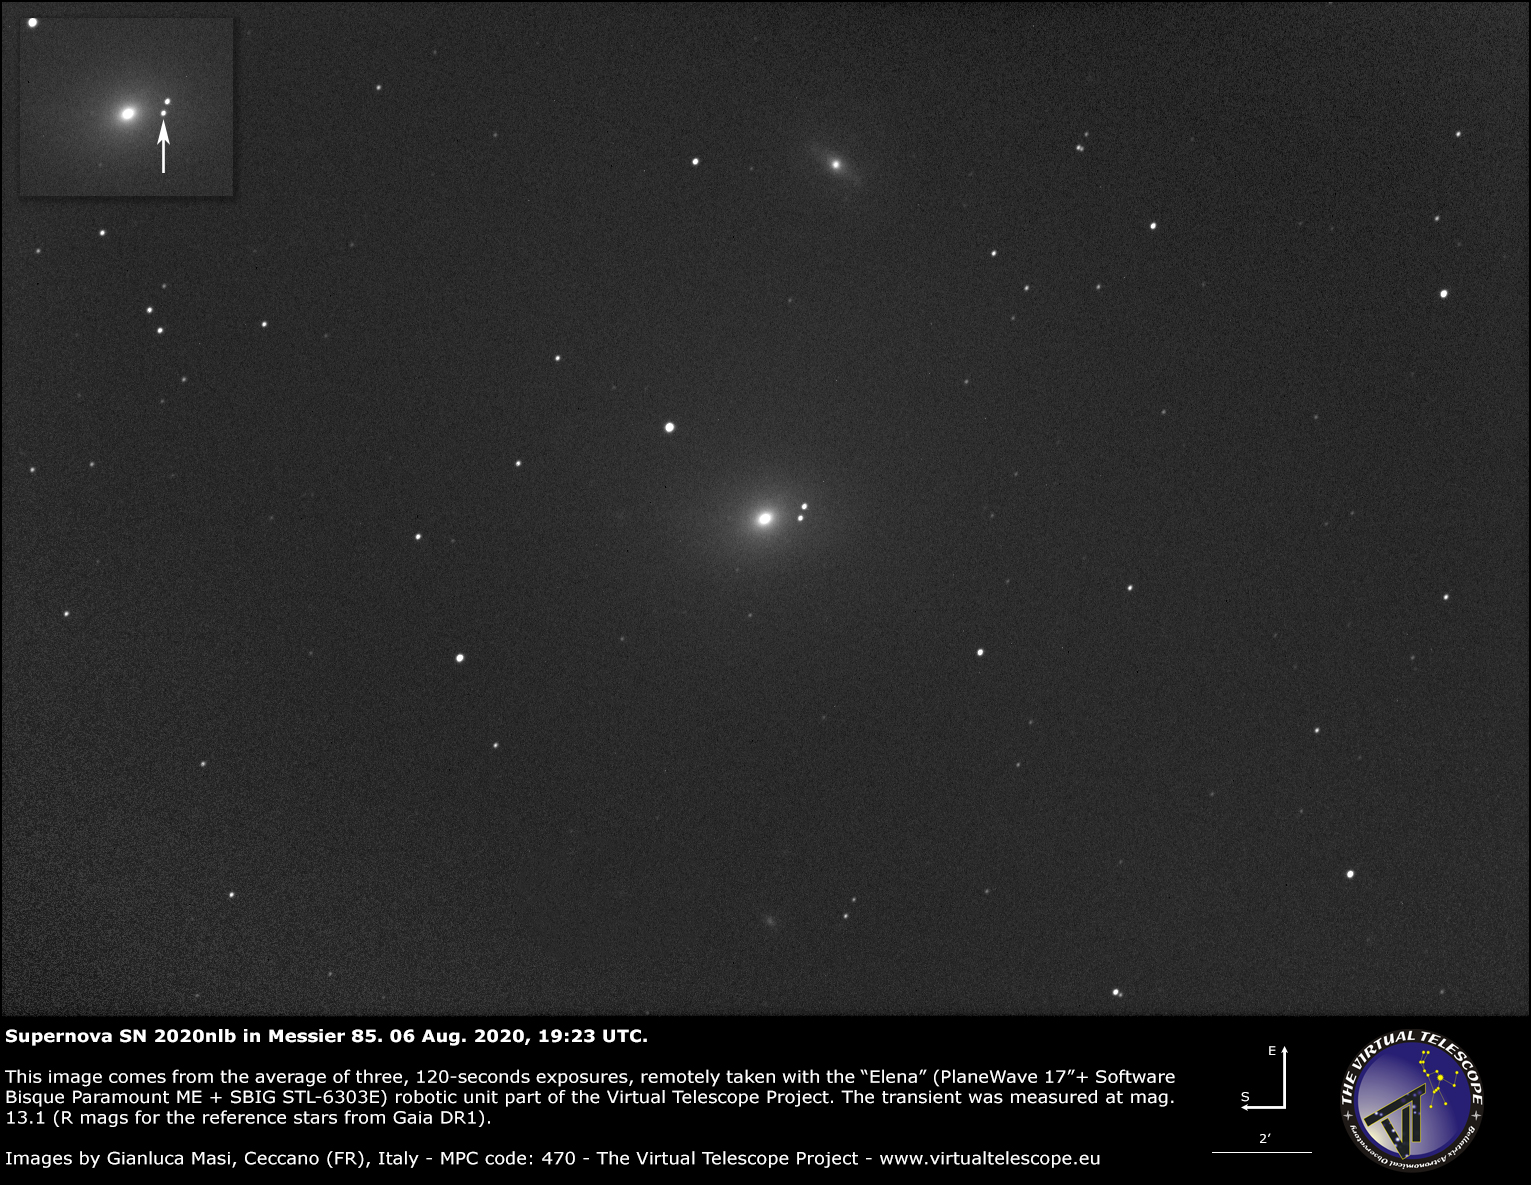 Supernova SN 2020nlb in Messier 85: an image - 06 Aug. 2020.